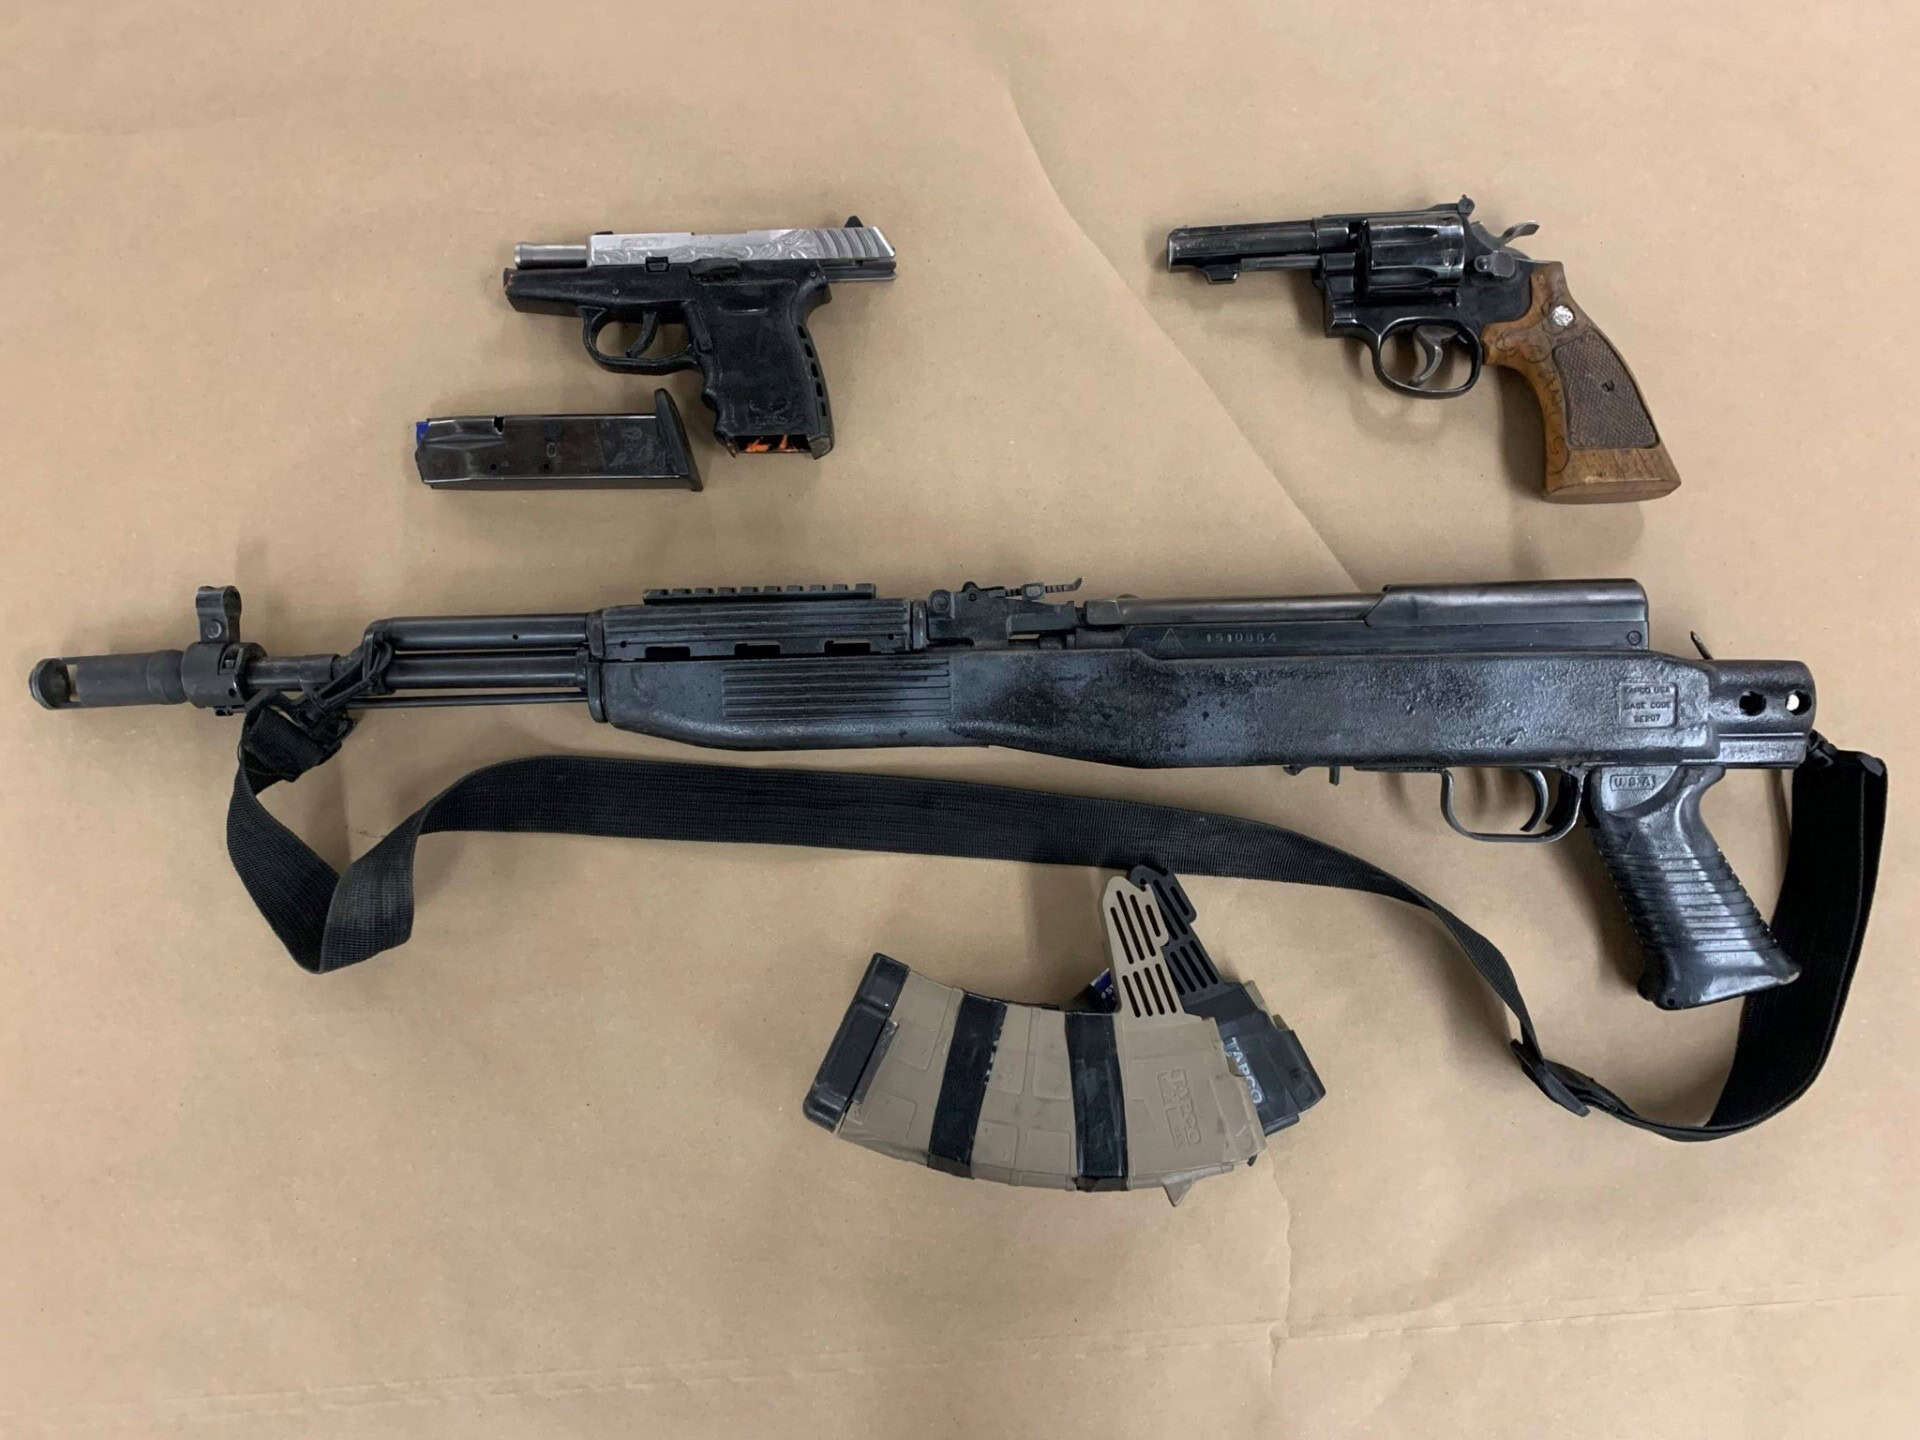 Firearms seized by Edmonton Police.